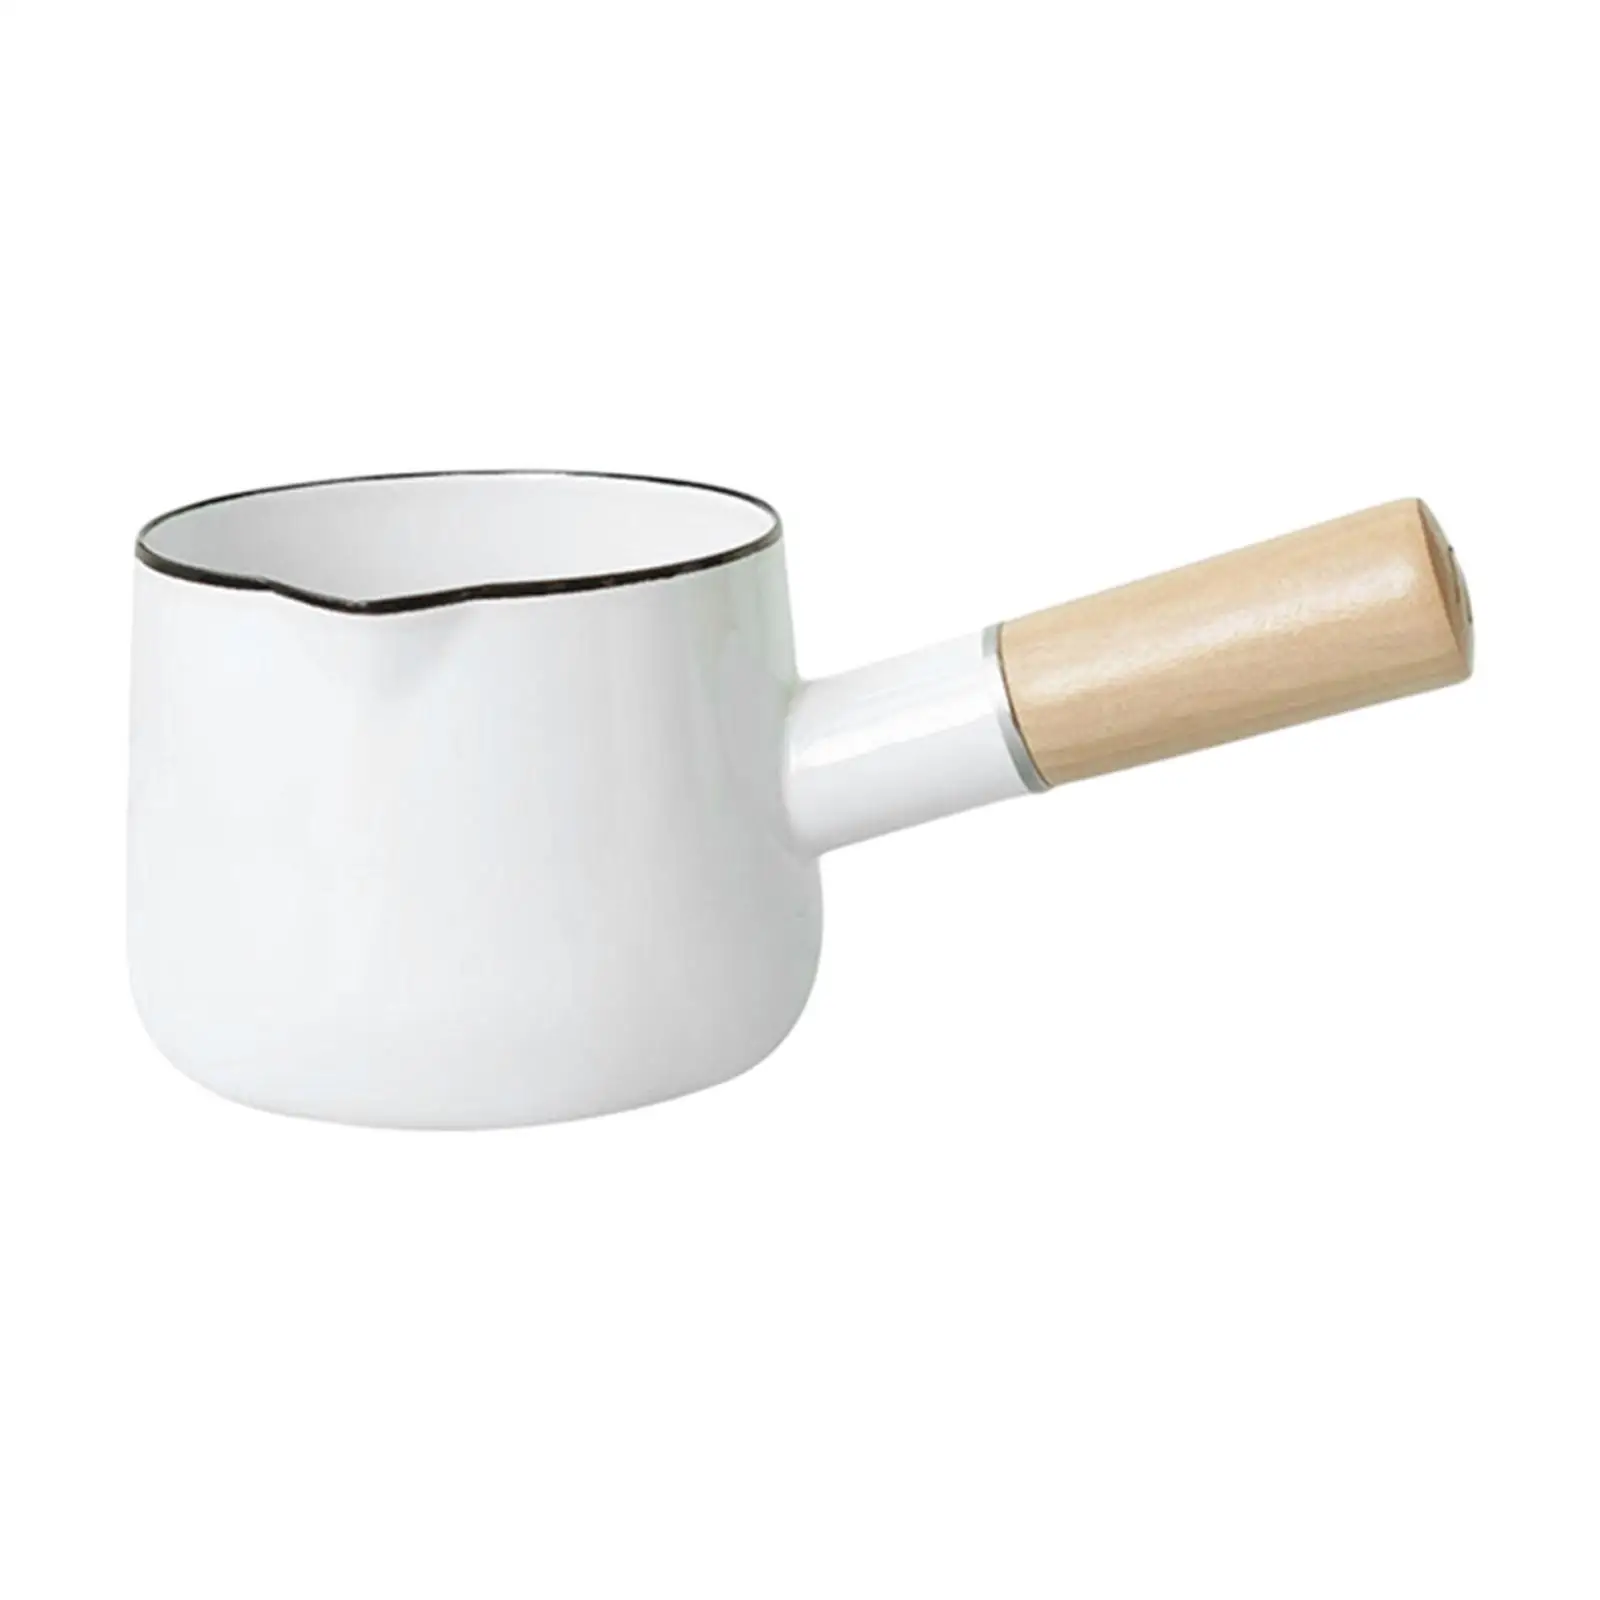 Enamel Milk Pan White Enamel Pot Enamel Milk Pot Mini Butter Warmer Wooden Handle Milk Warmer for Picnic Restaurant Home Kitchen